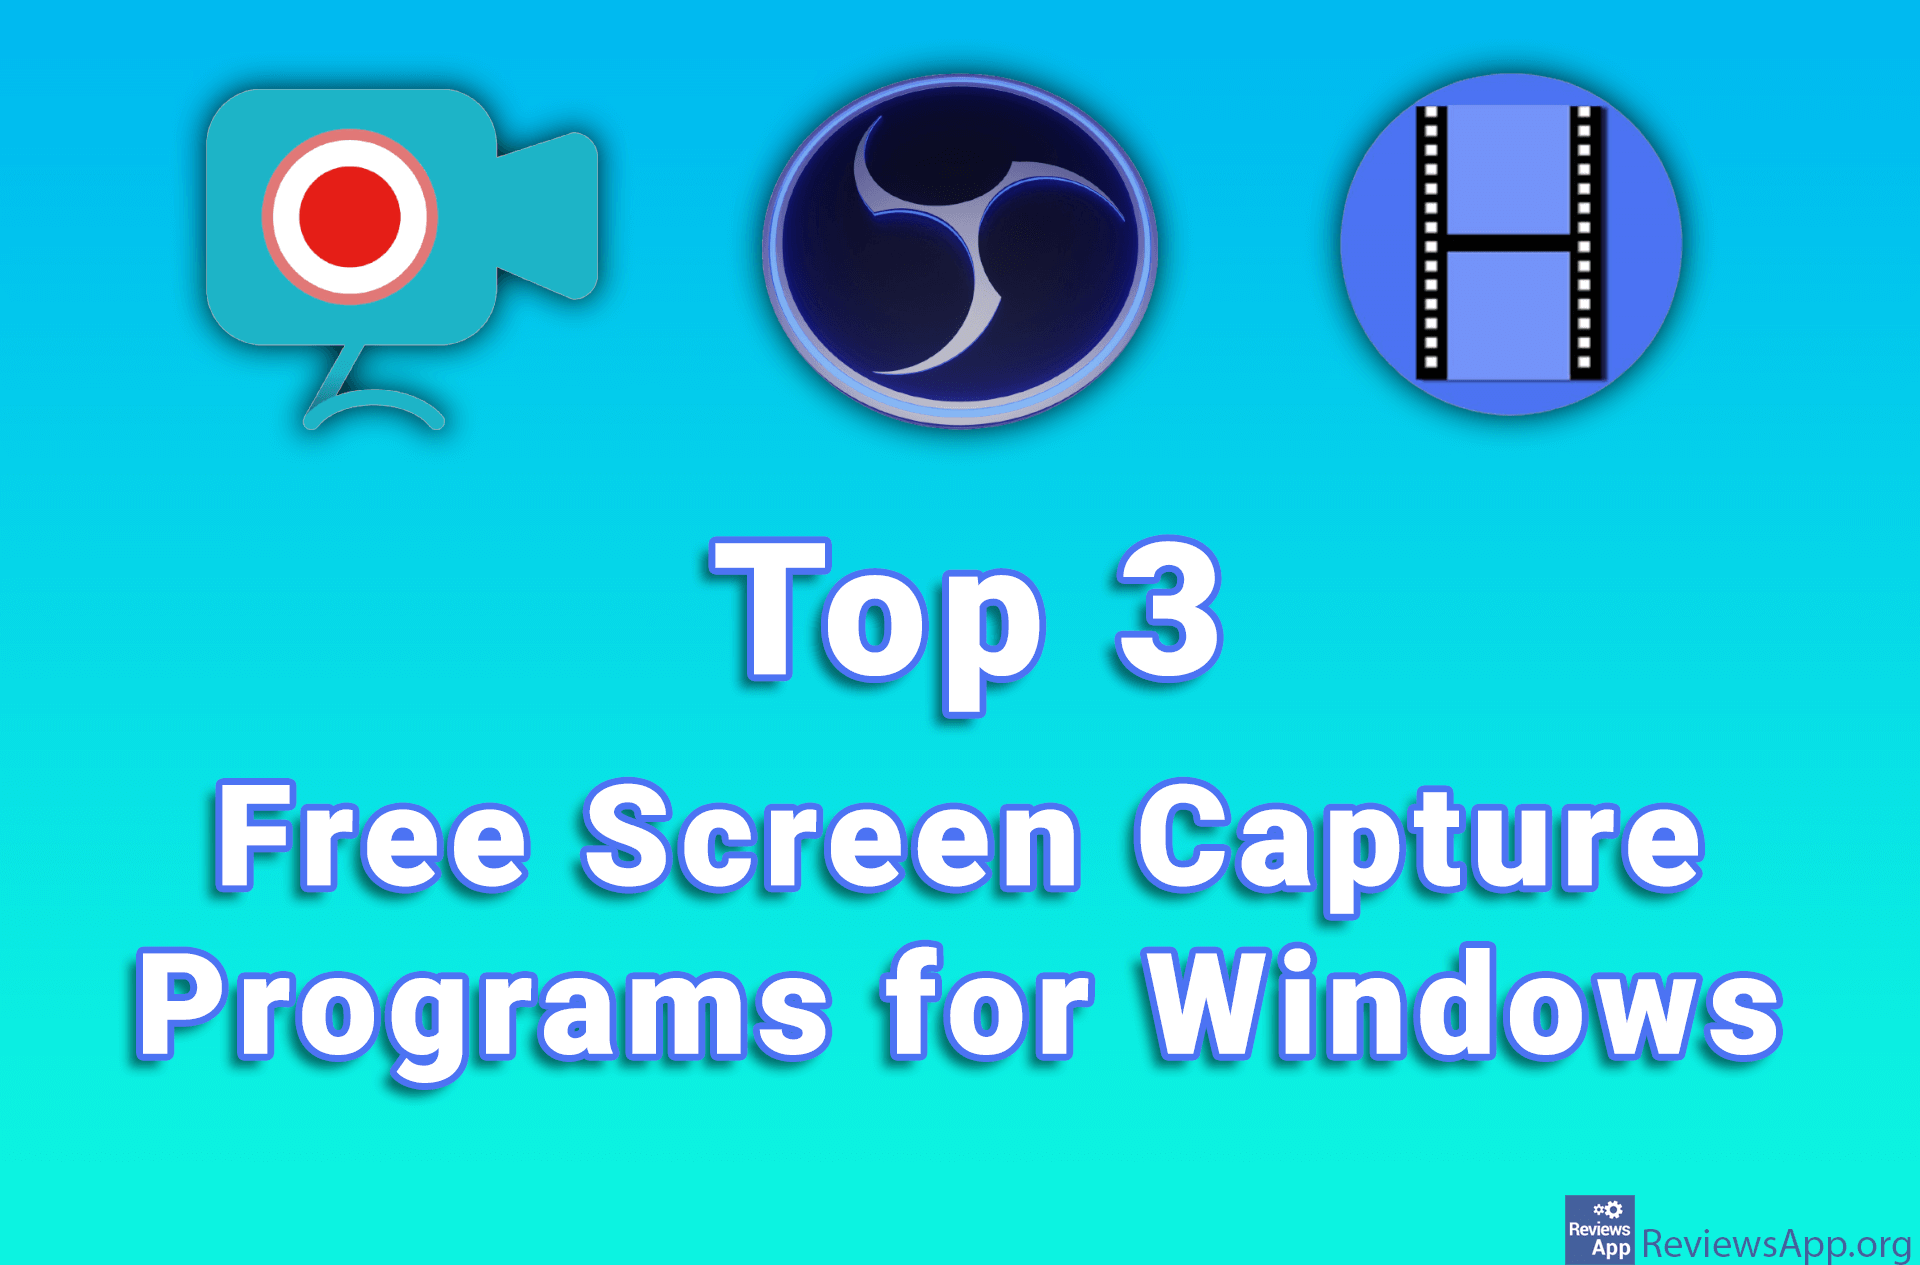 Top 3 Free Screen Capture Programs for Windows